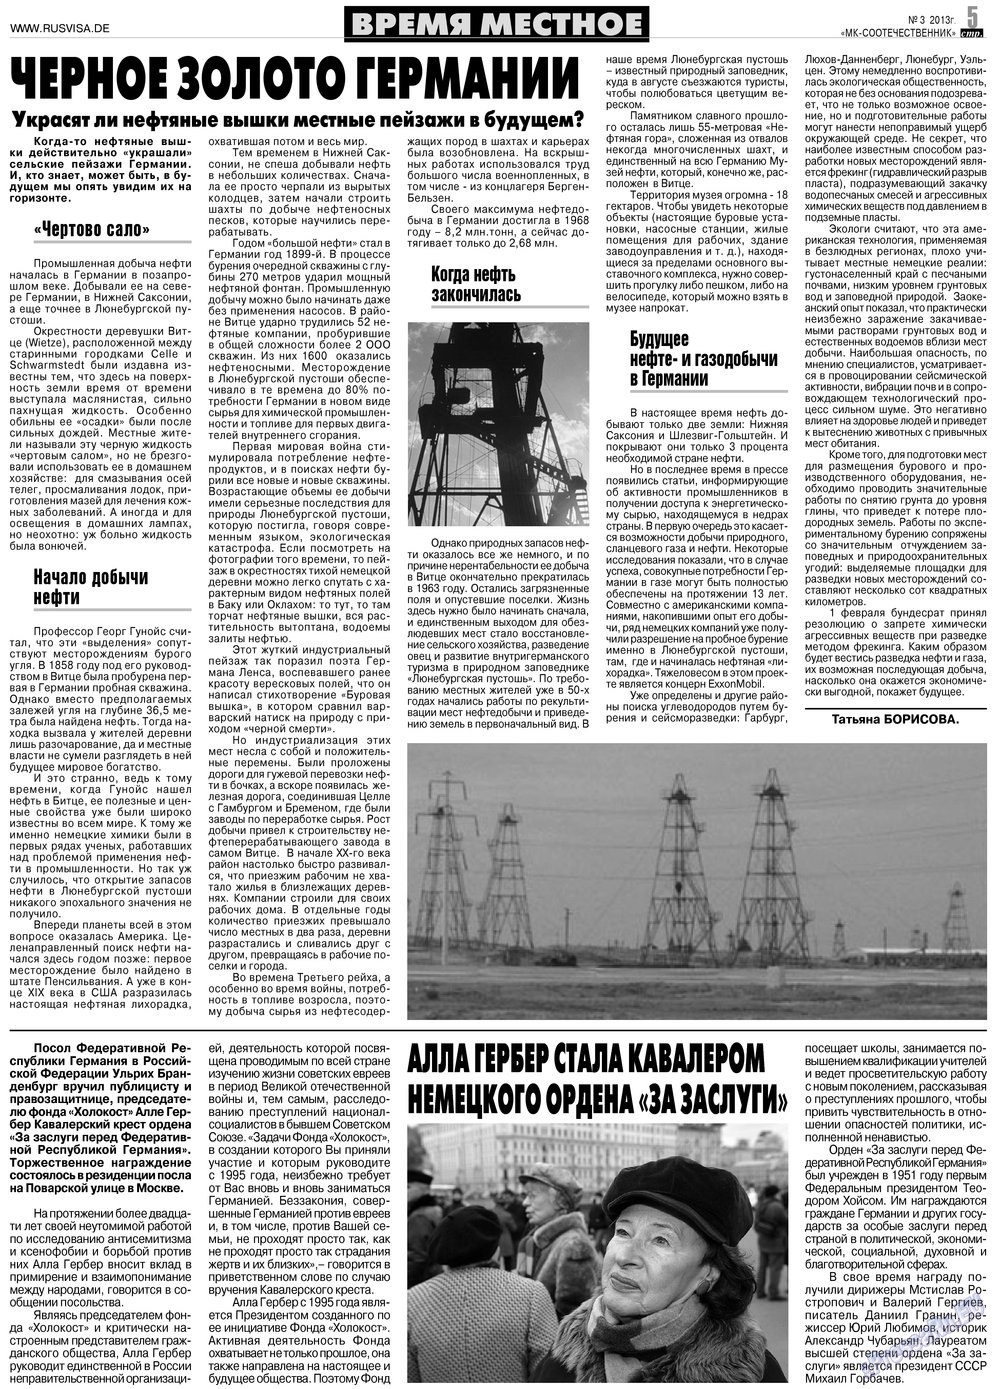 МК-Германия планета мнений, газета. 2013 №3 стр.5